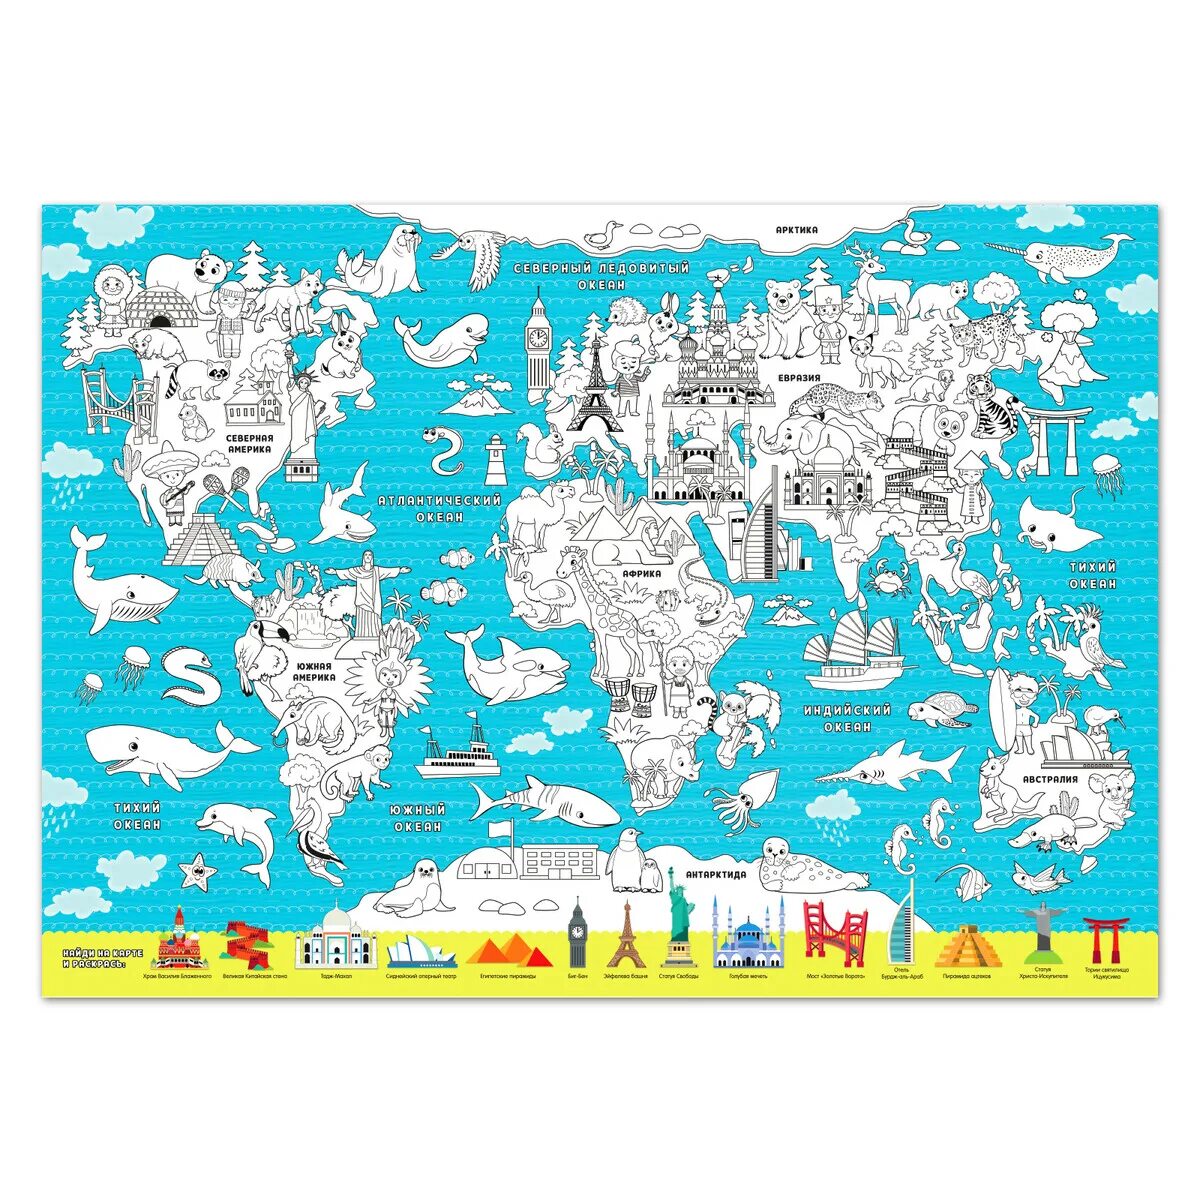 Giant world map #17